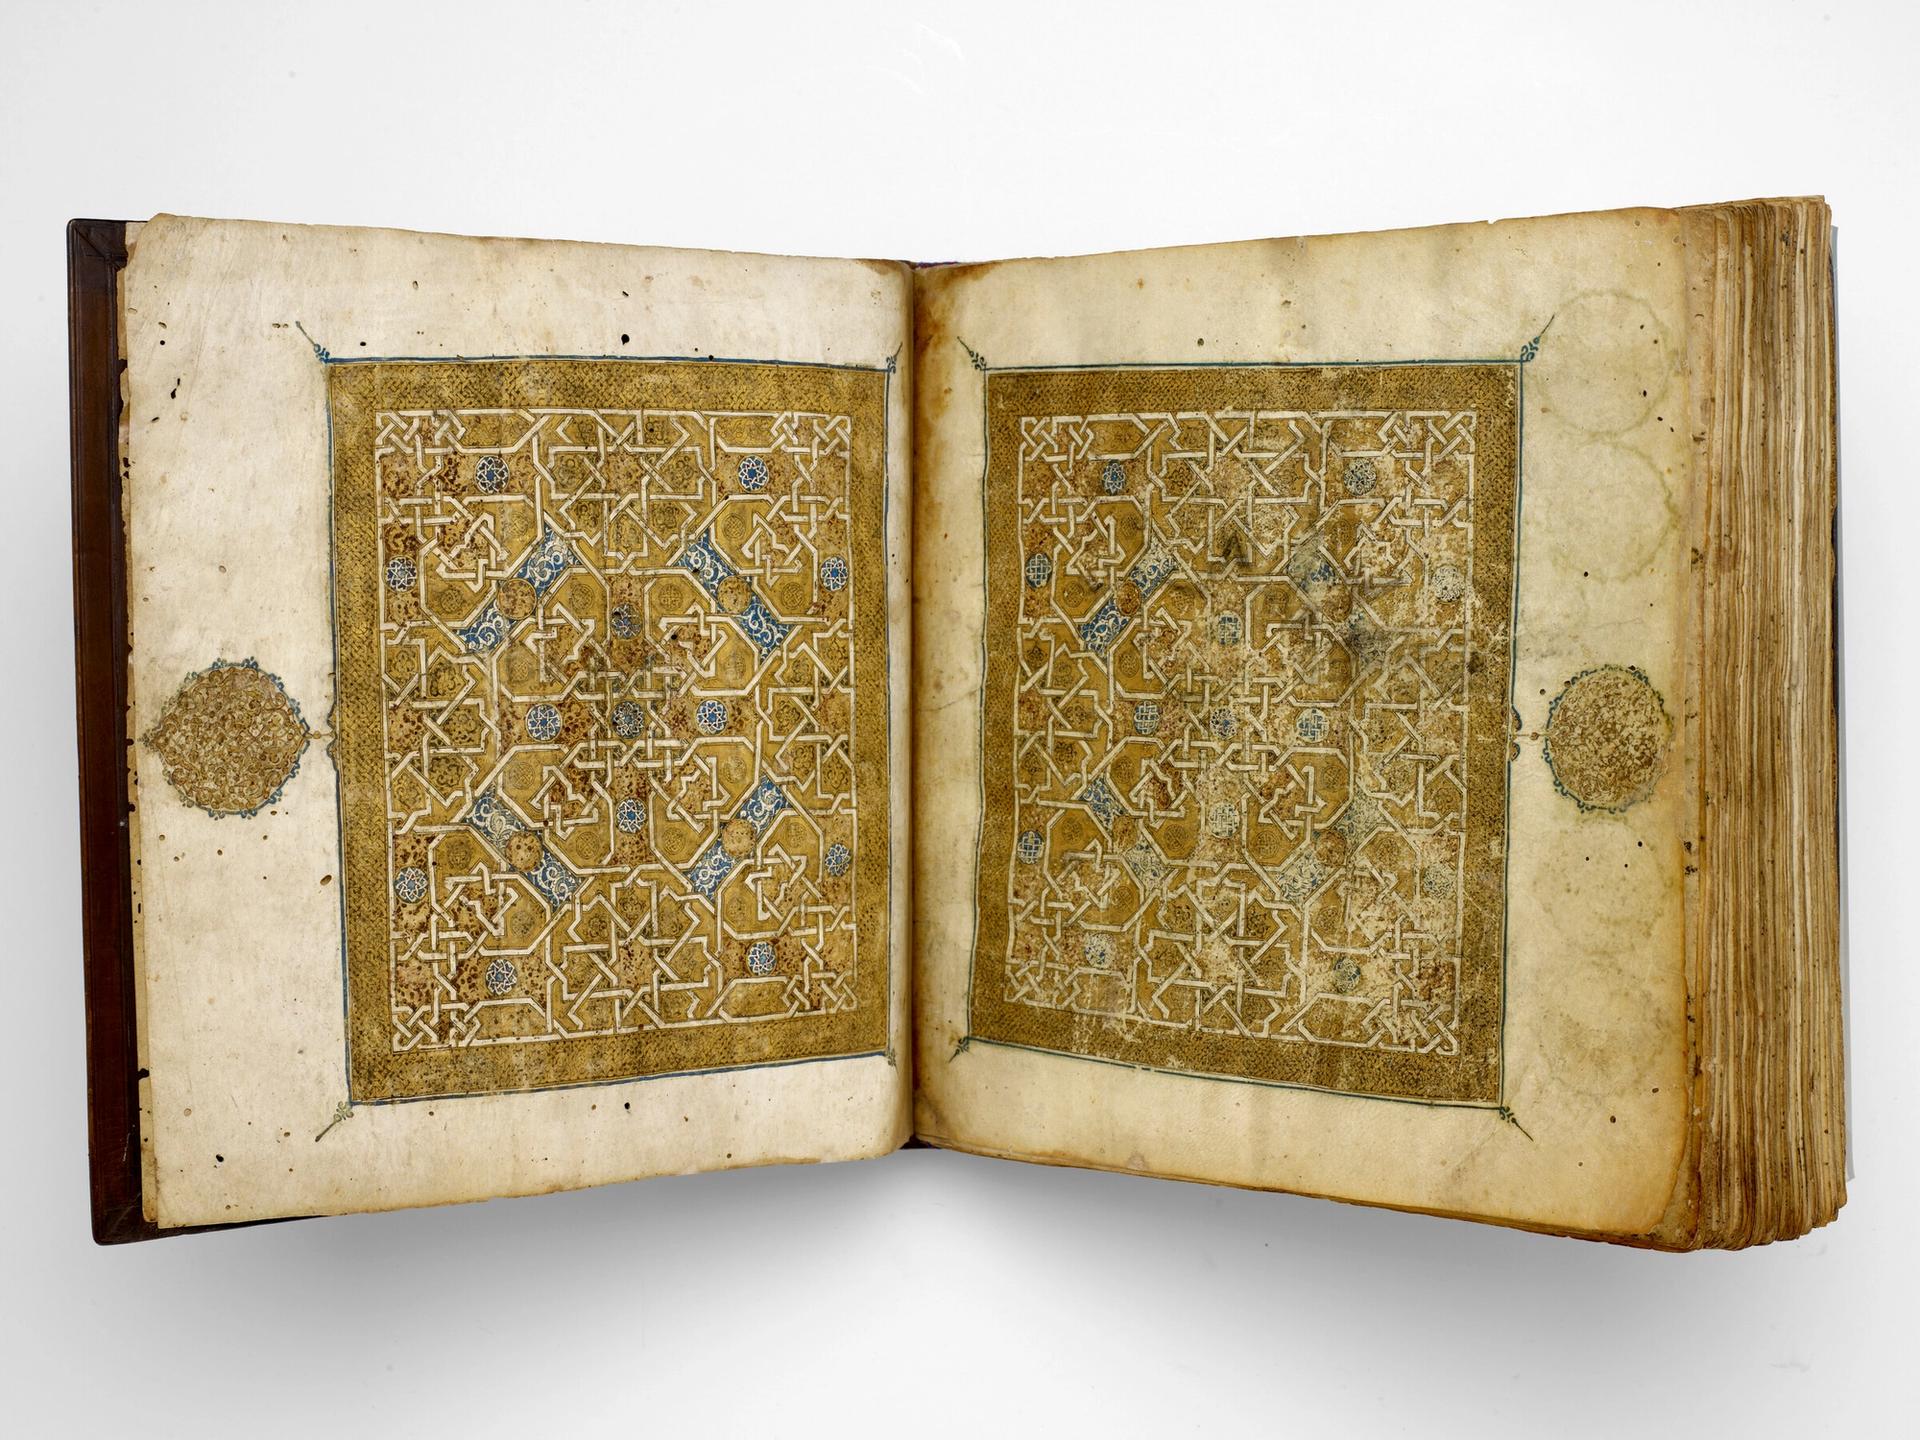 Qur’an Manuscript in Maghribi Script. Morocco, end of Rabi’ al-Awwal, AH 718 / 1318CE The Museum of Fine Arts, Houston